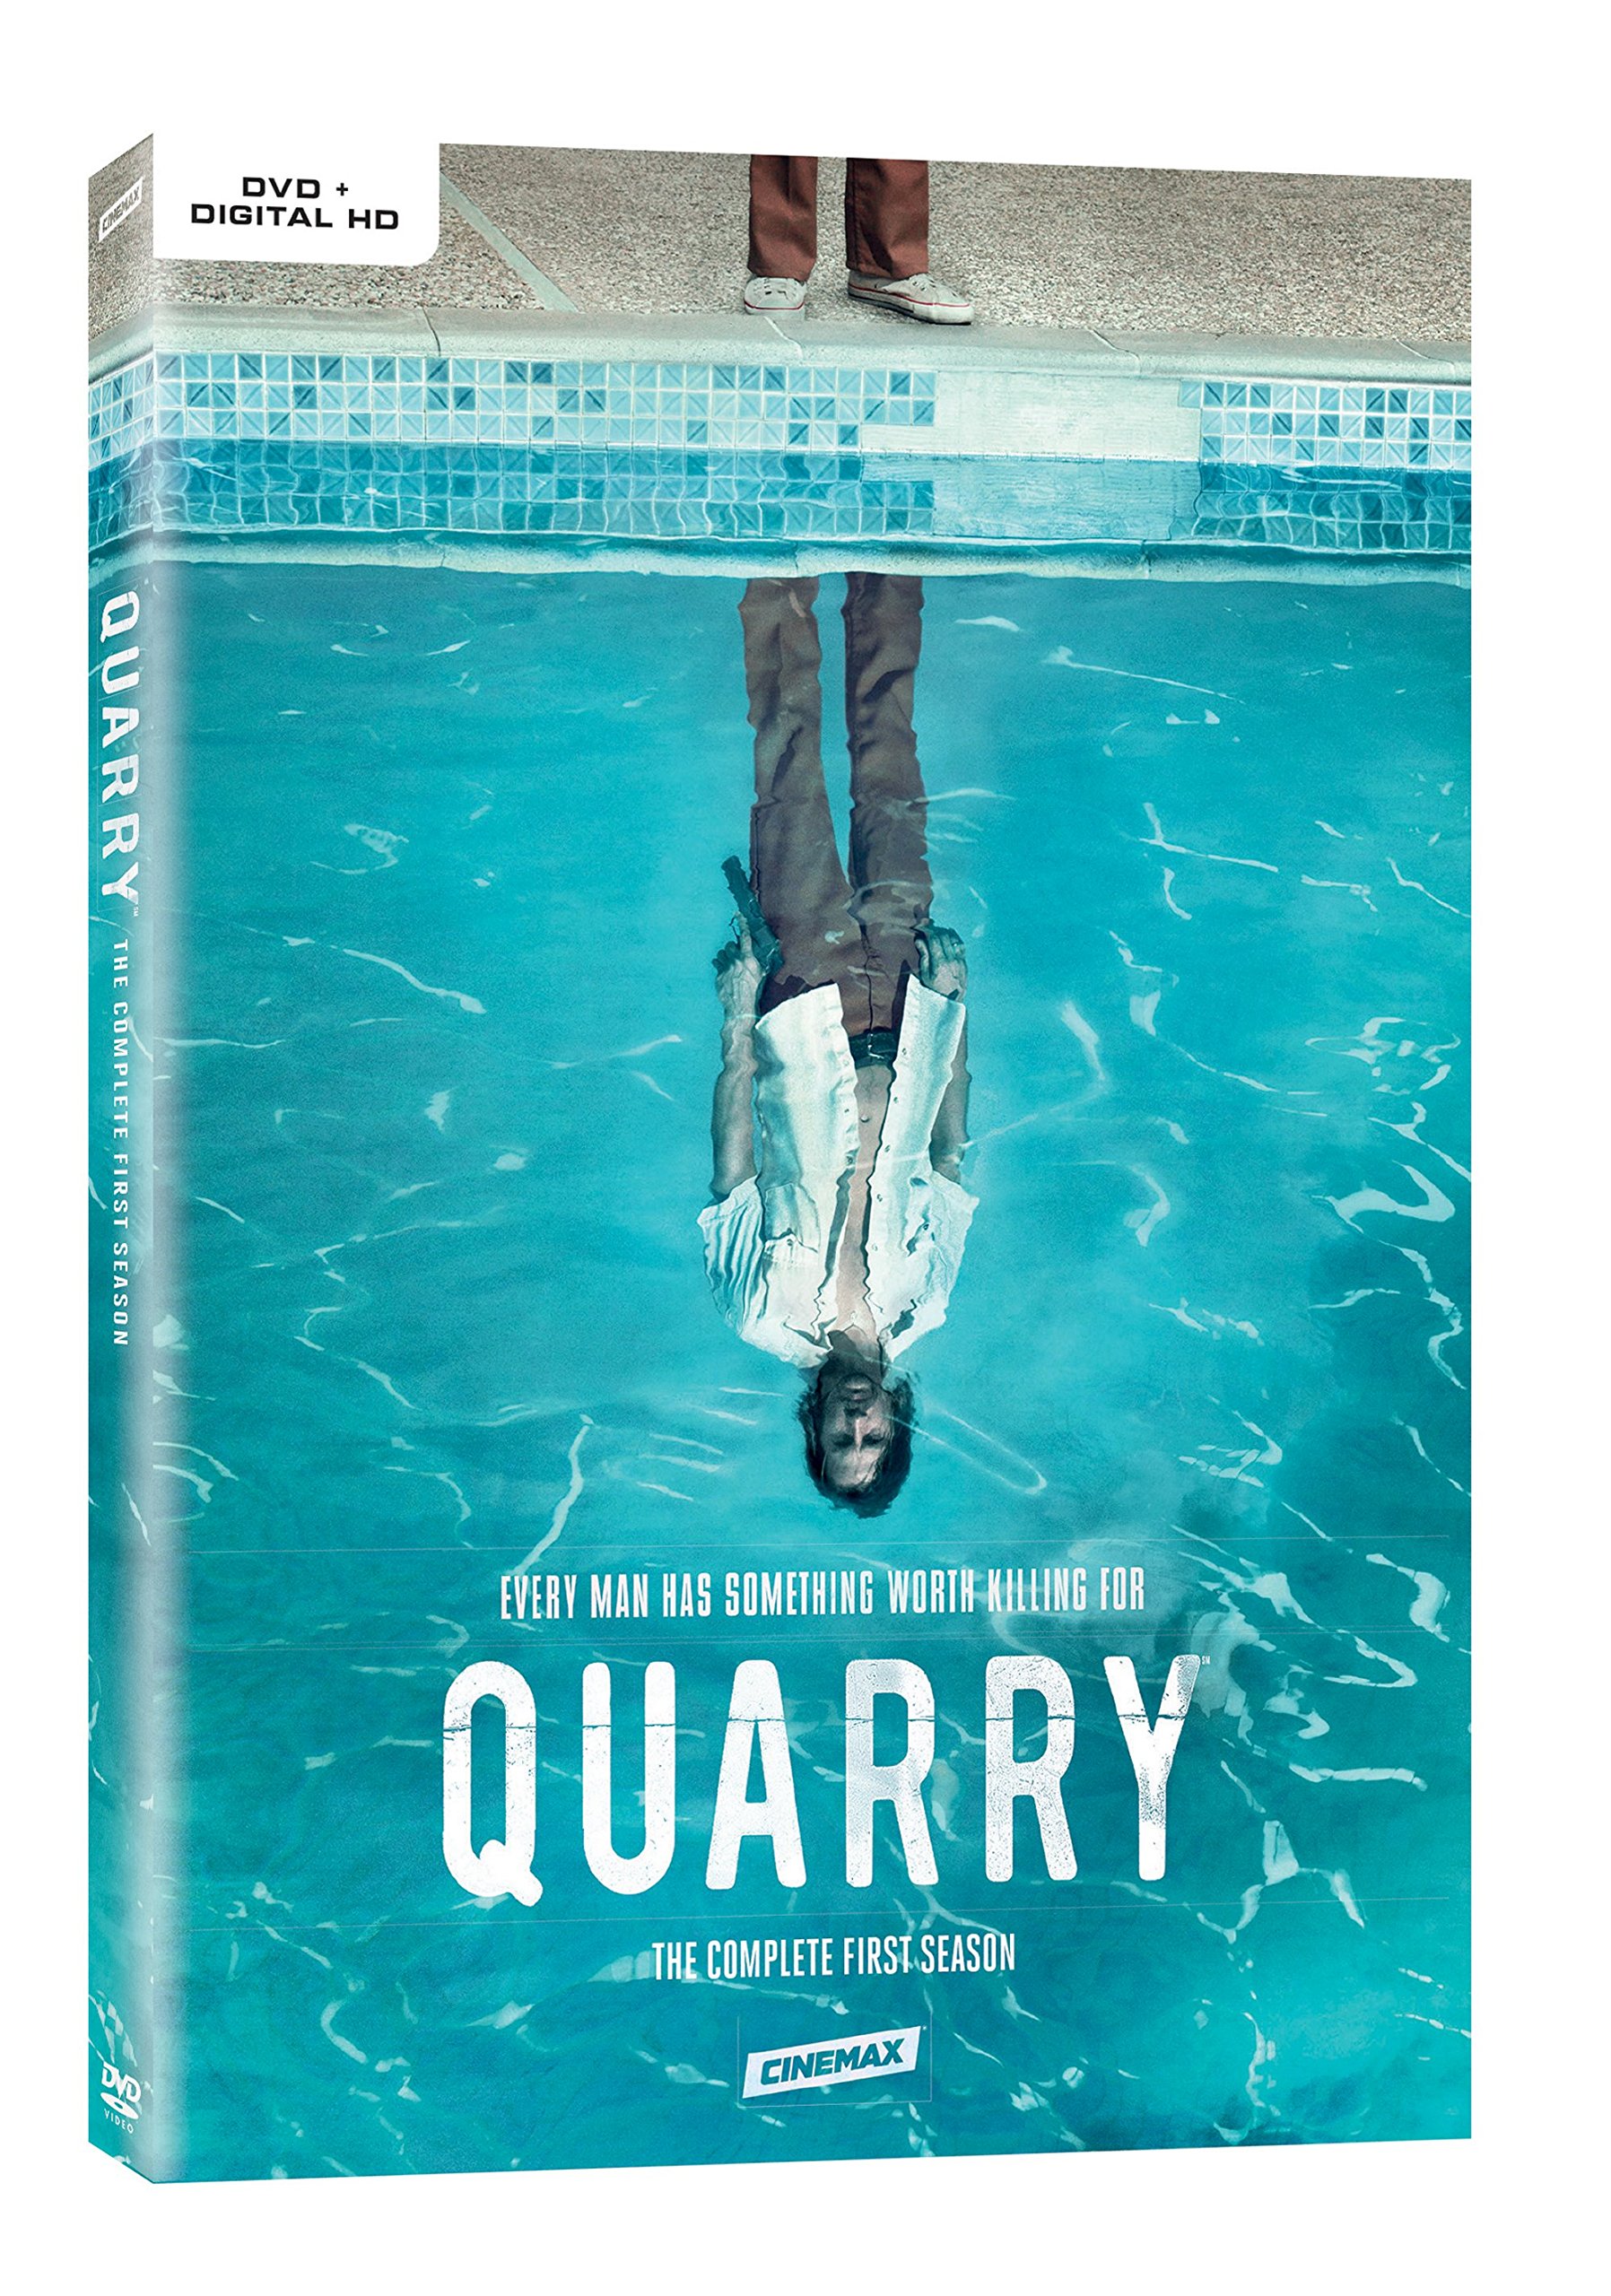 Quarry DVD Release Date